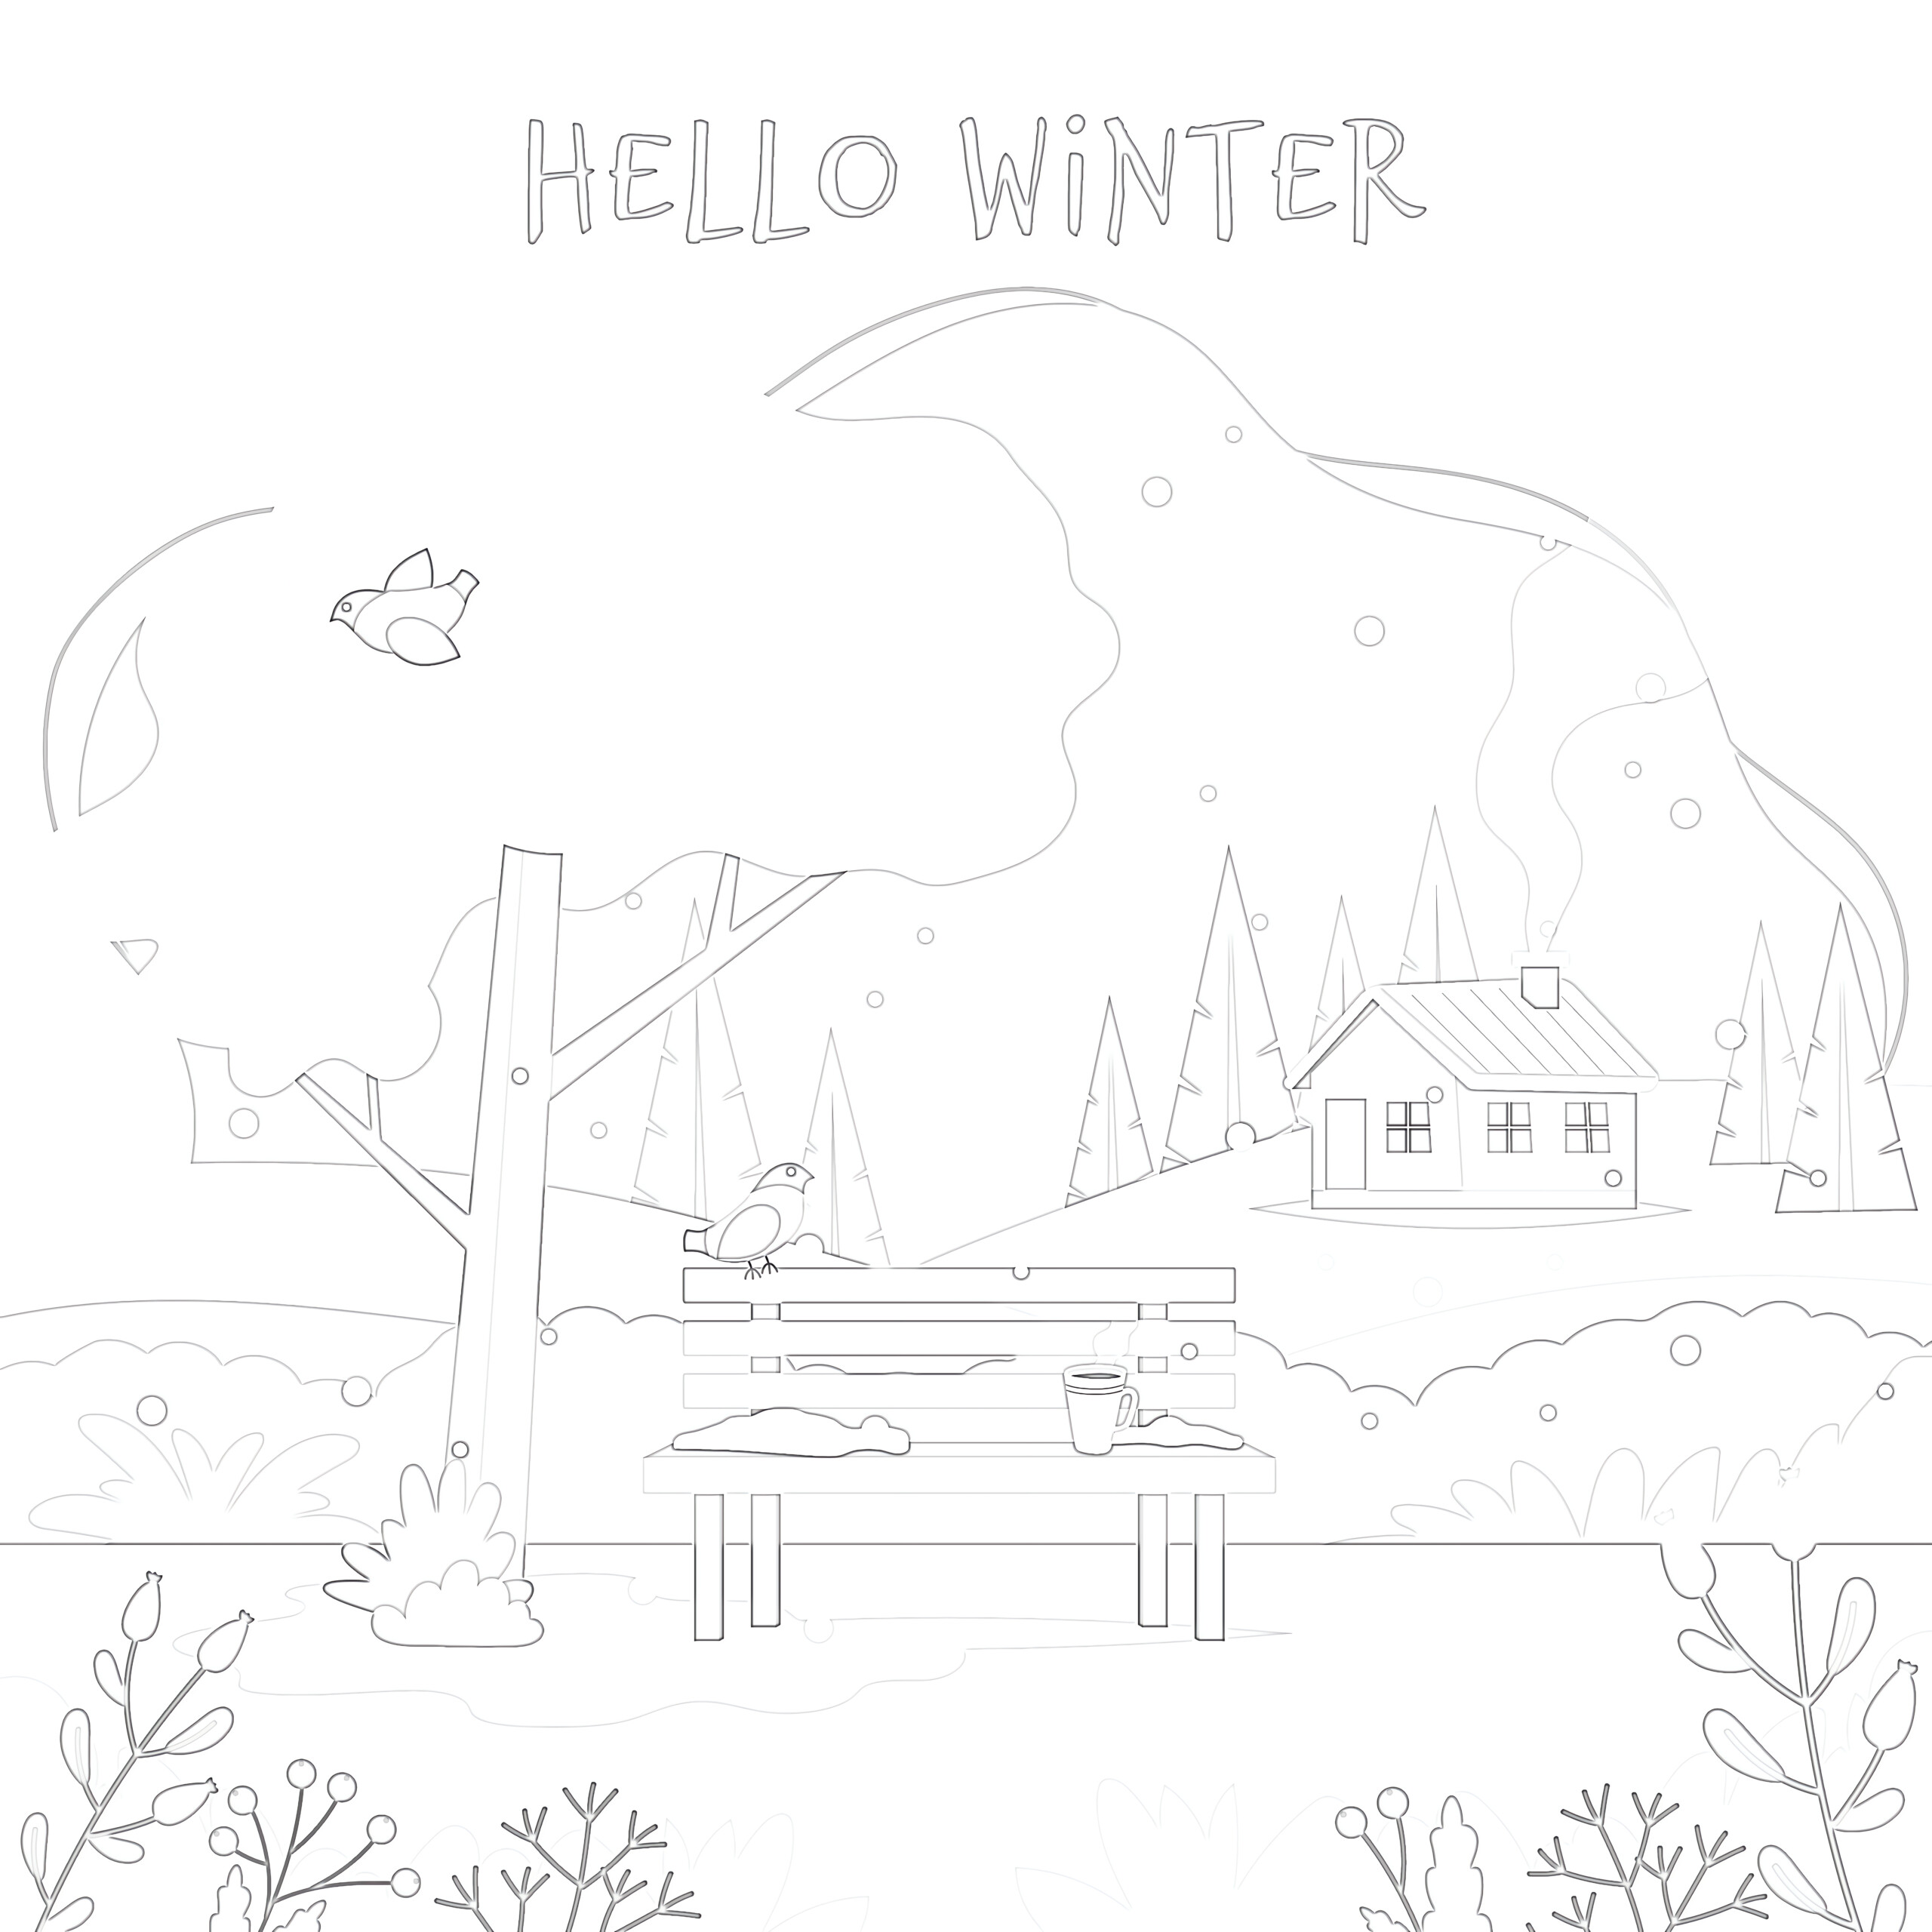 Hello Winter - Coloring page